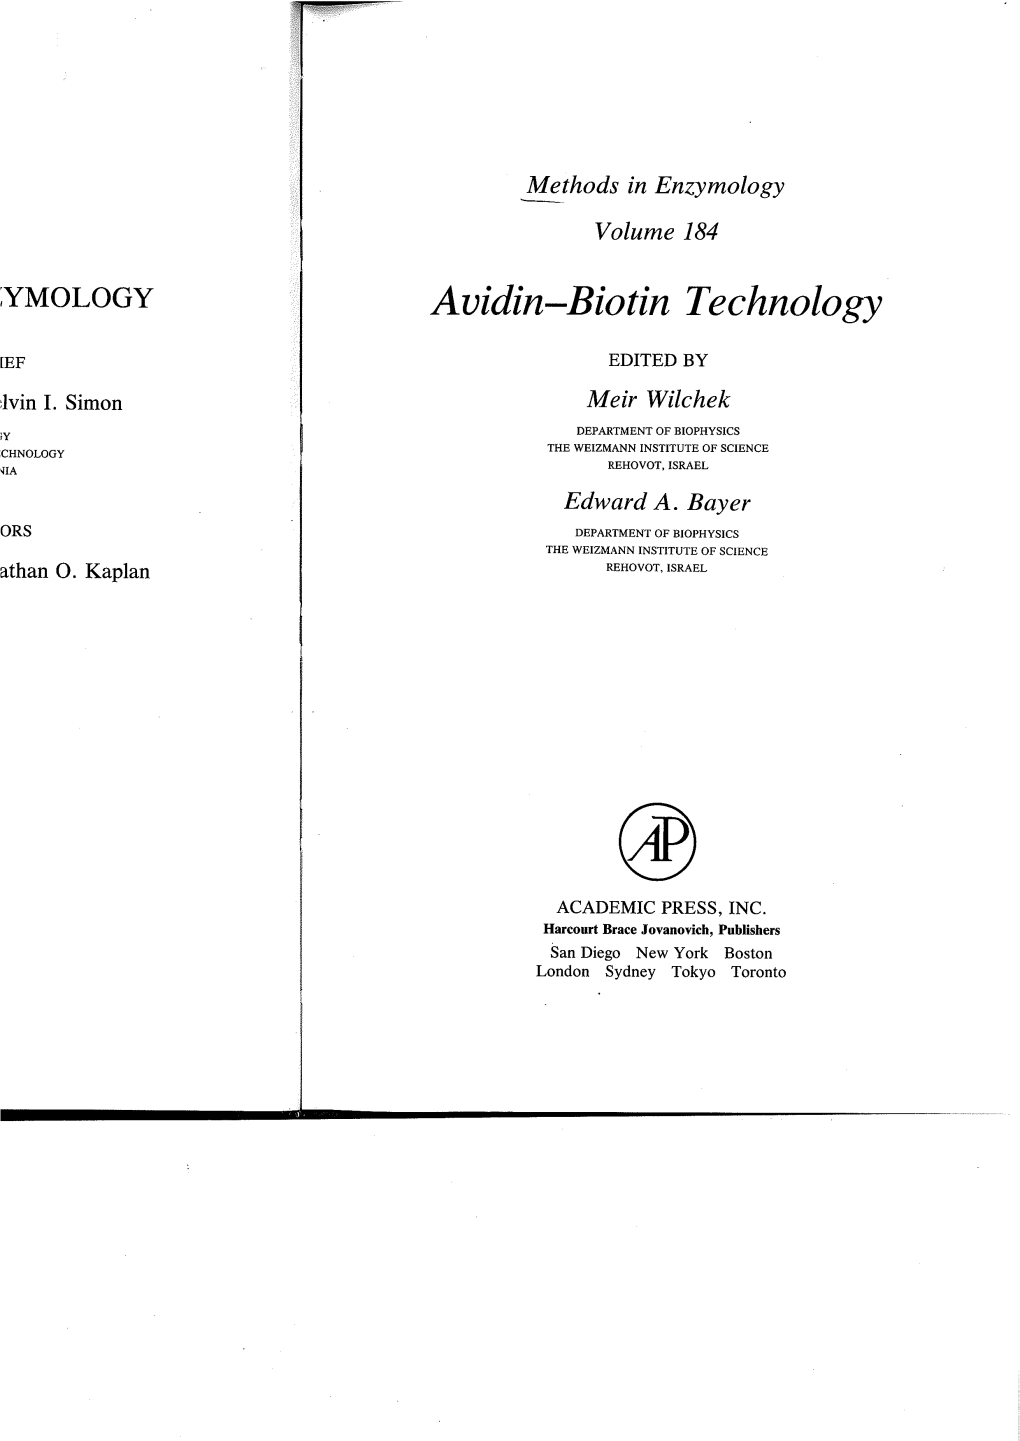 Avidin-Biotin Technology